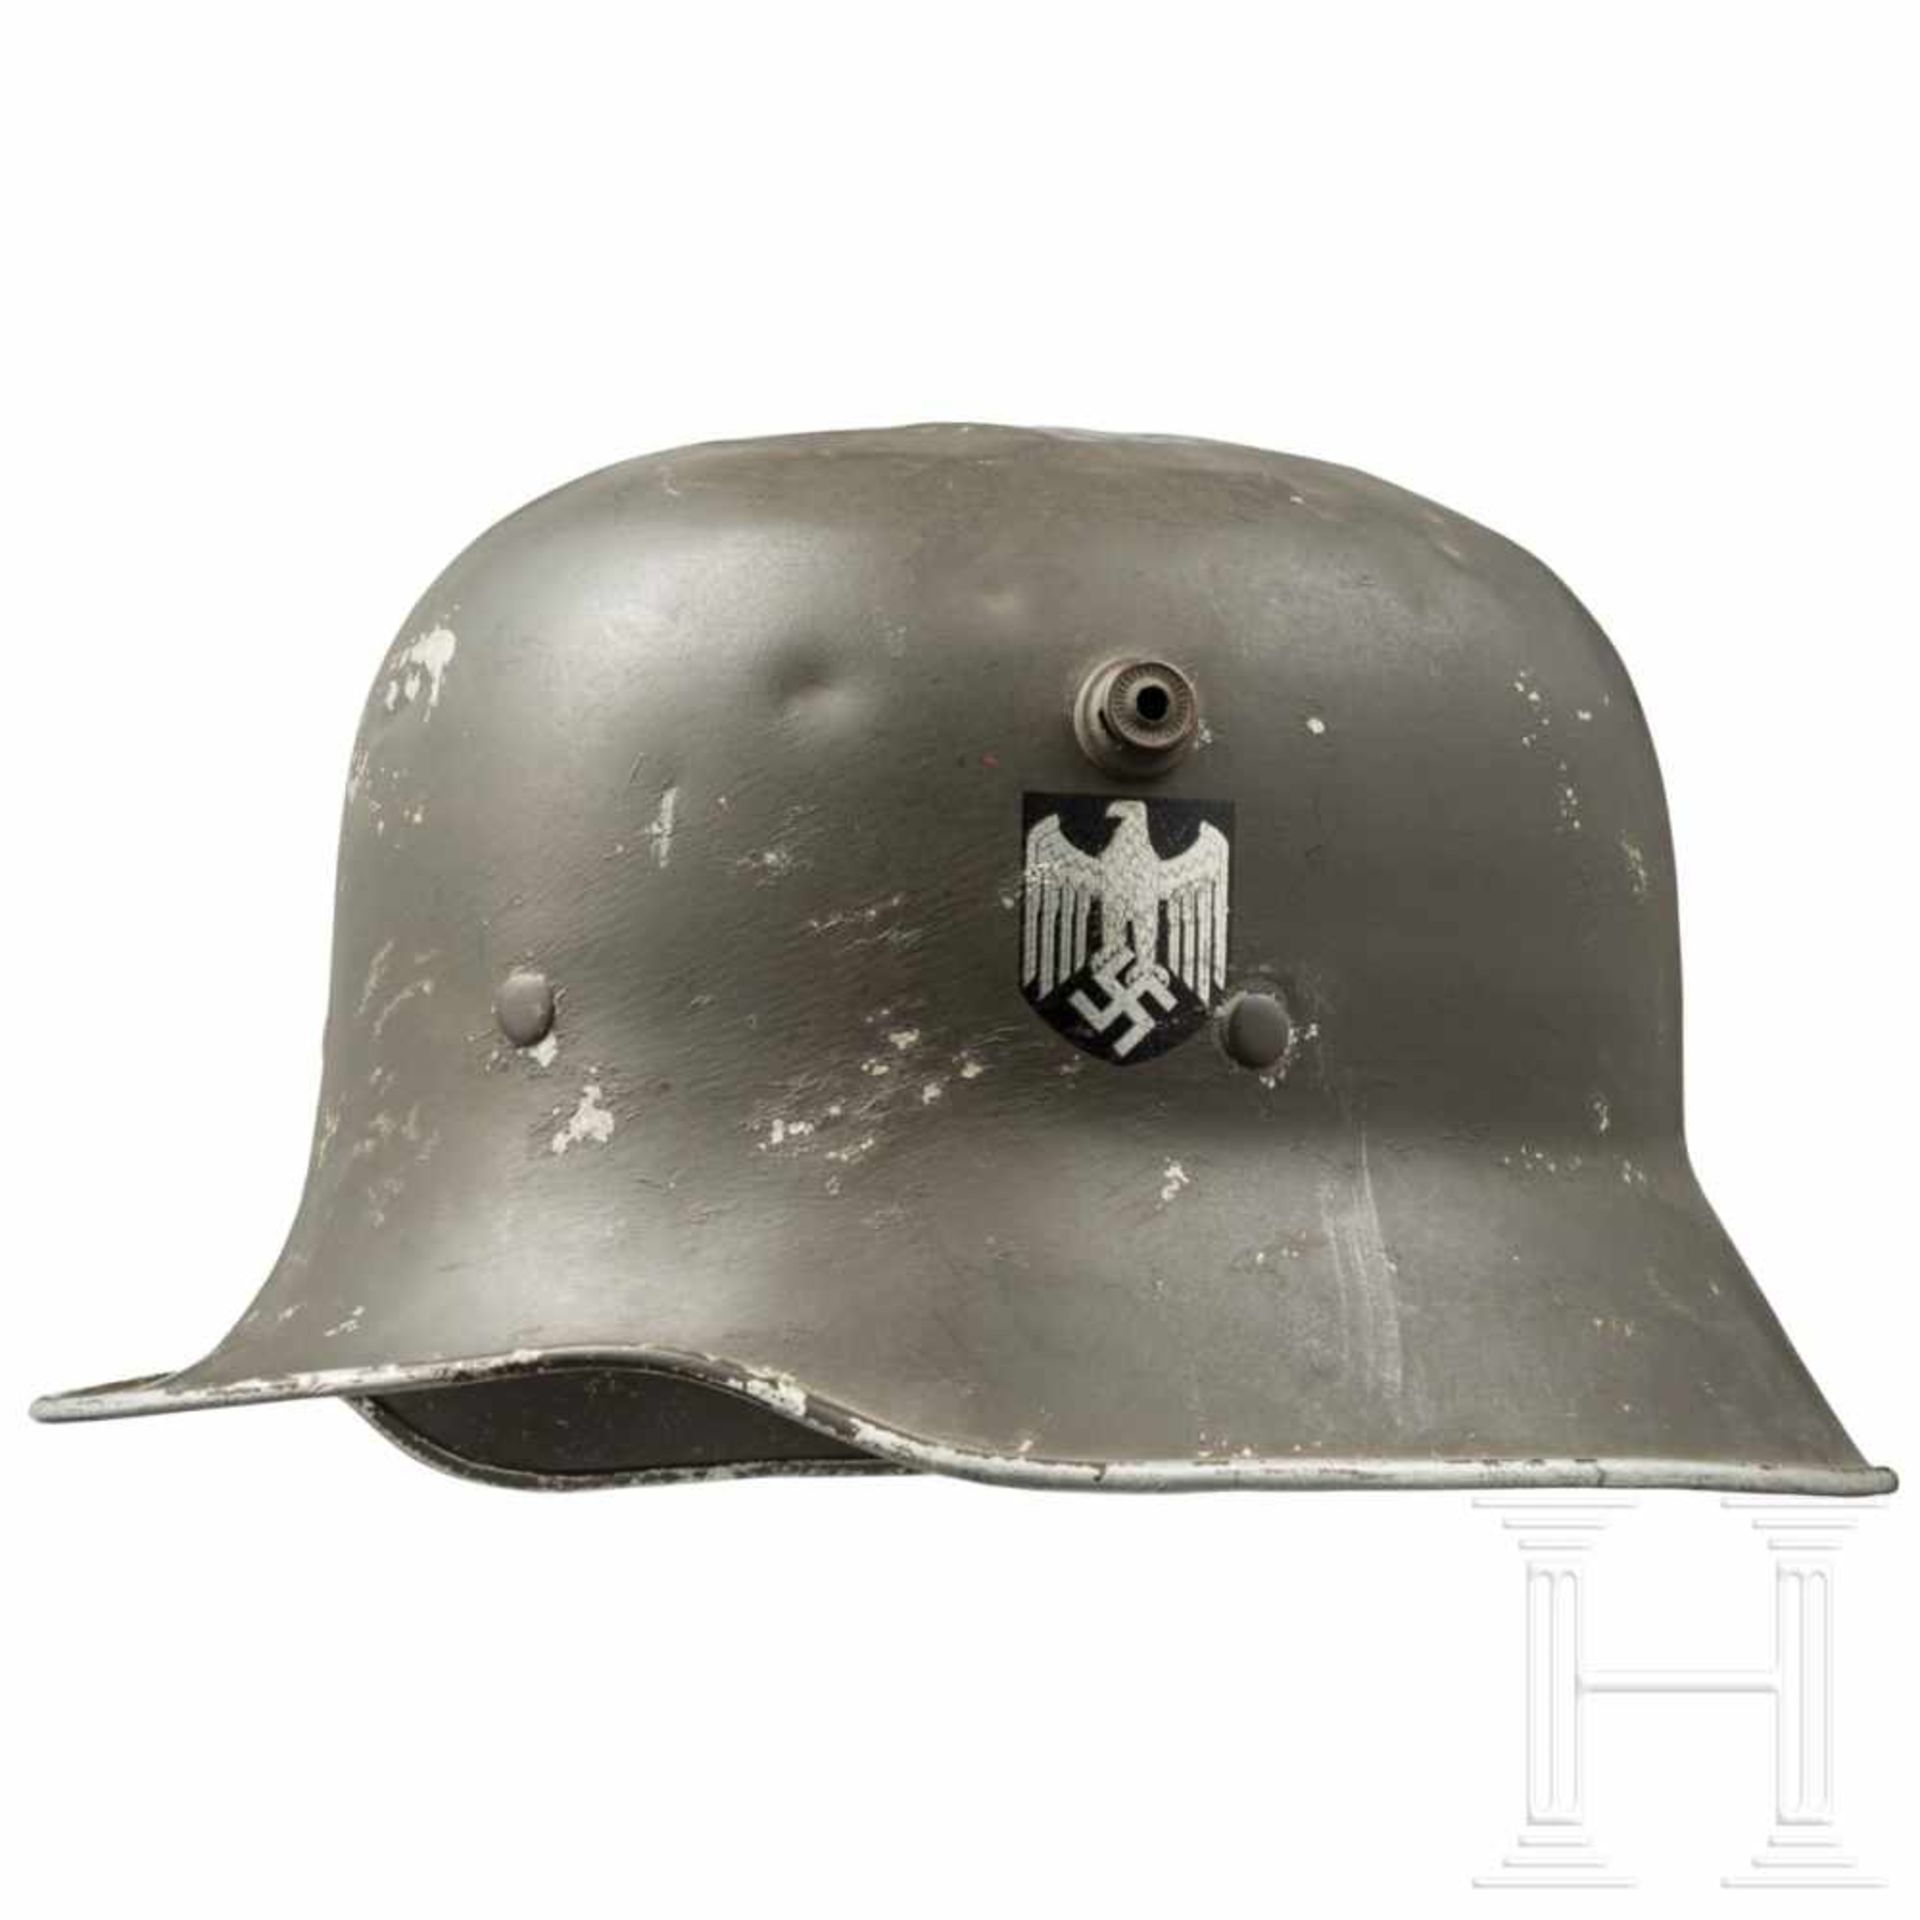 A parade helmet of the army with both decalsGlocke aus feldgrau lackiertem Leichtmetall (